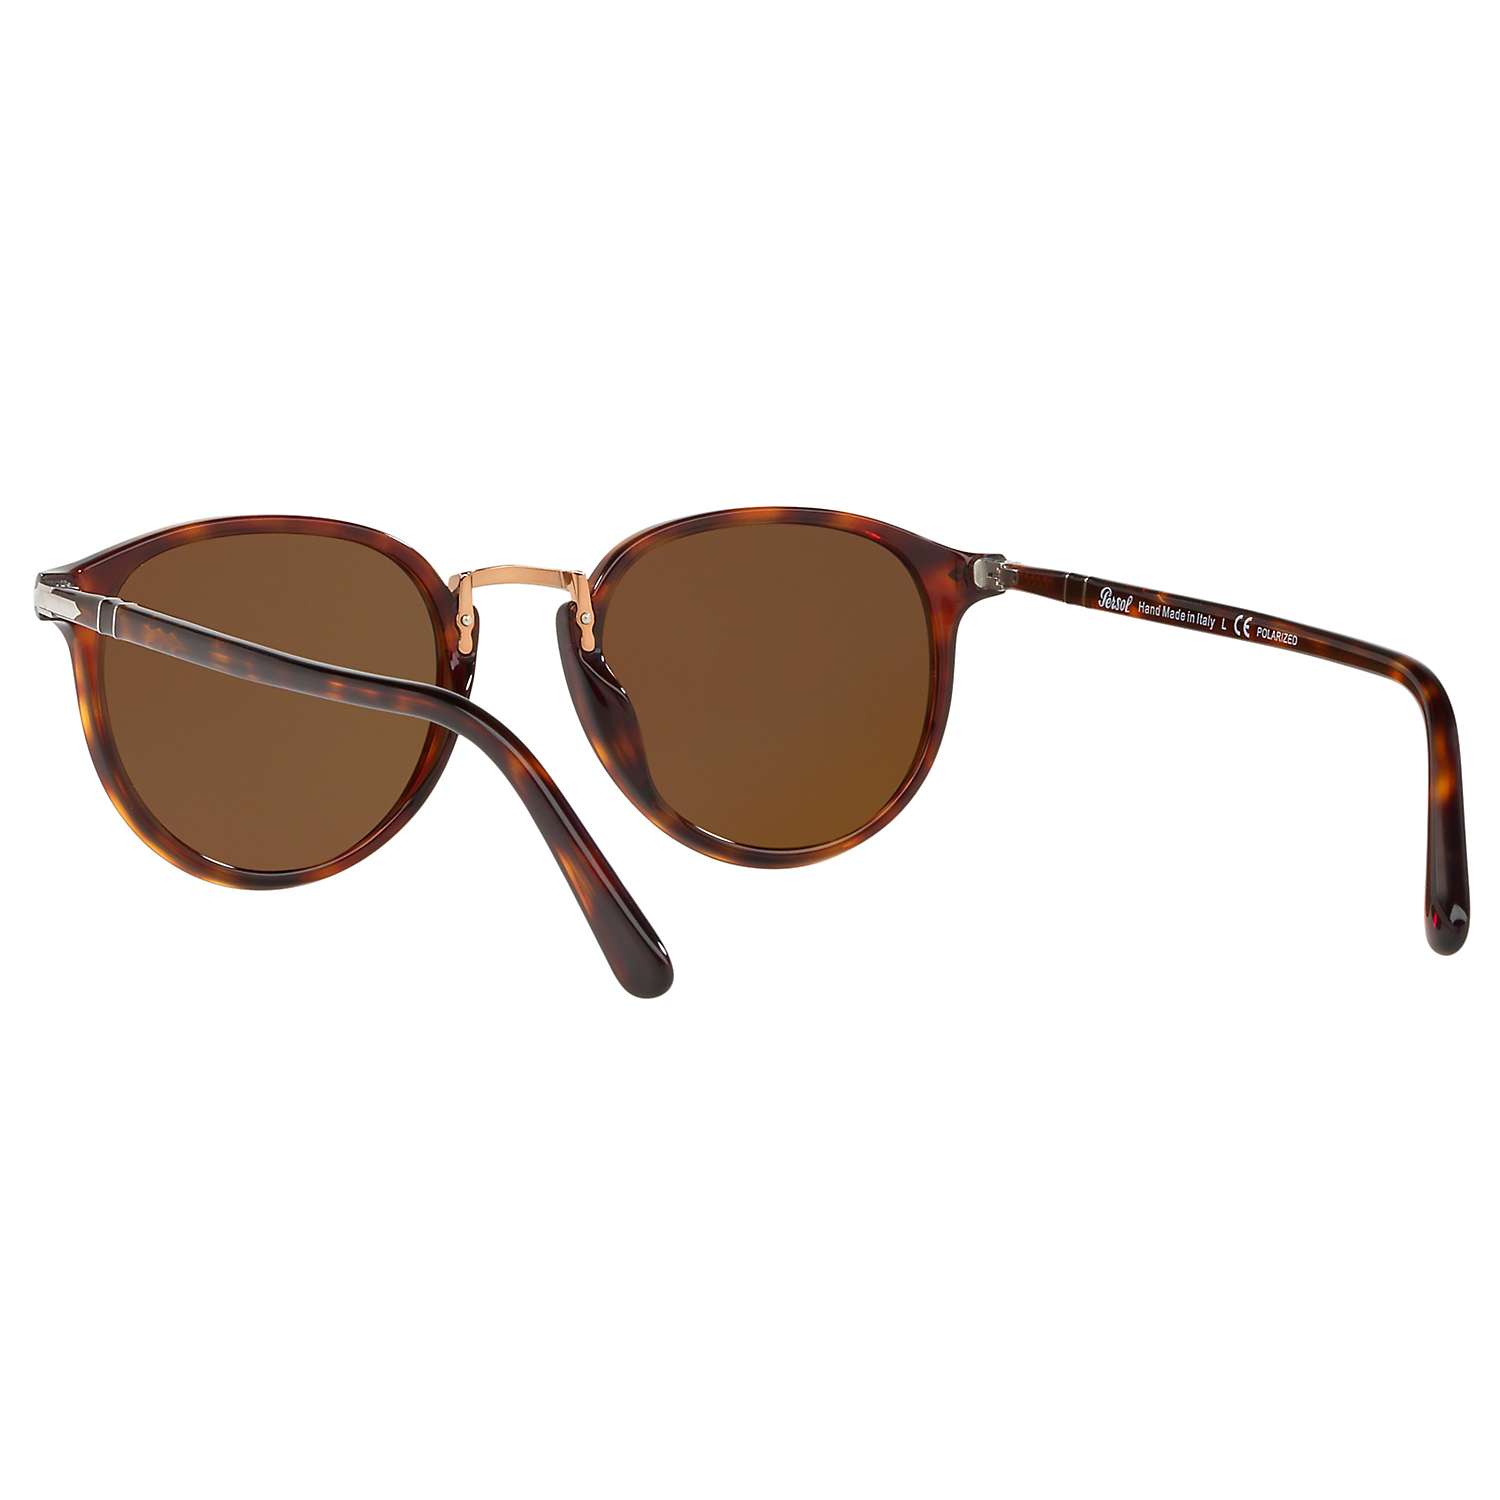 Buy Persol PO3210S Men's Polarised Oval Sunglasses, Tortoise/Brown Online at johnlewis.com